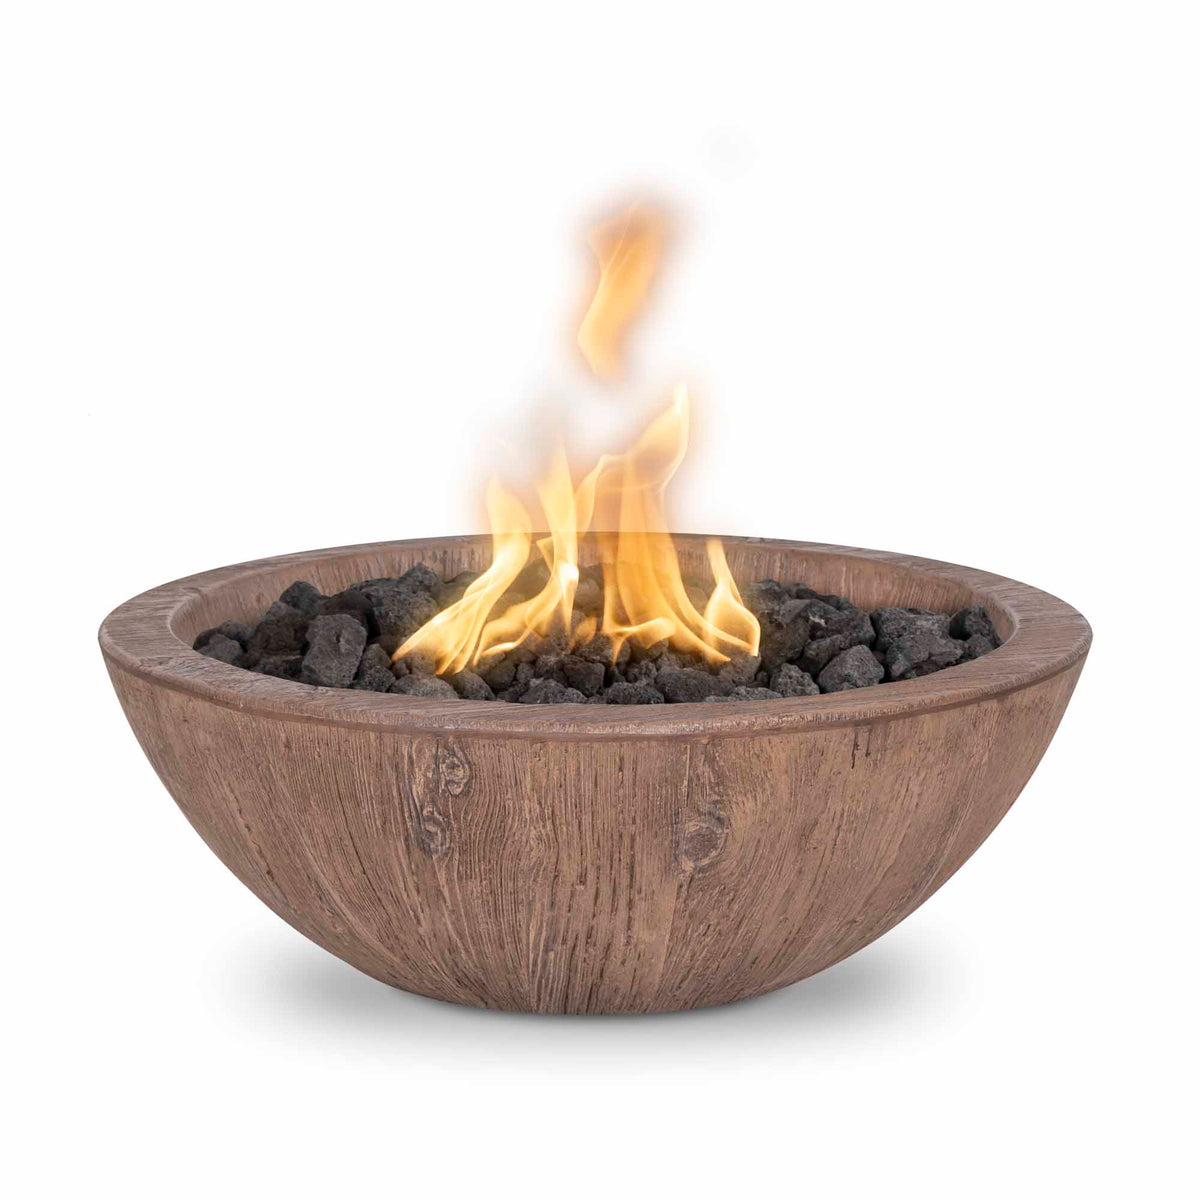 The Outdoor Plus - Sedona Fire Bowl - Wood Grain Concrete